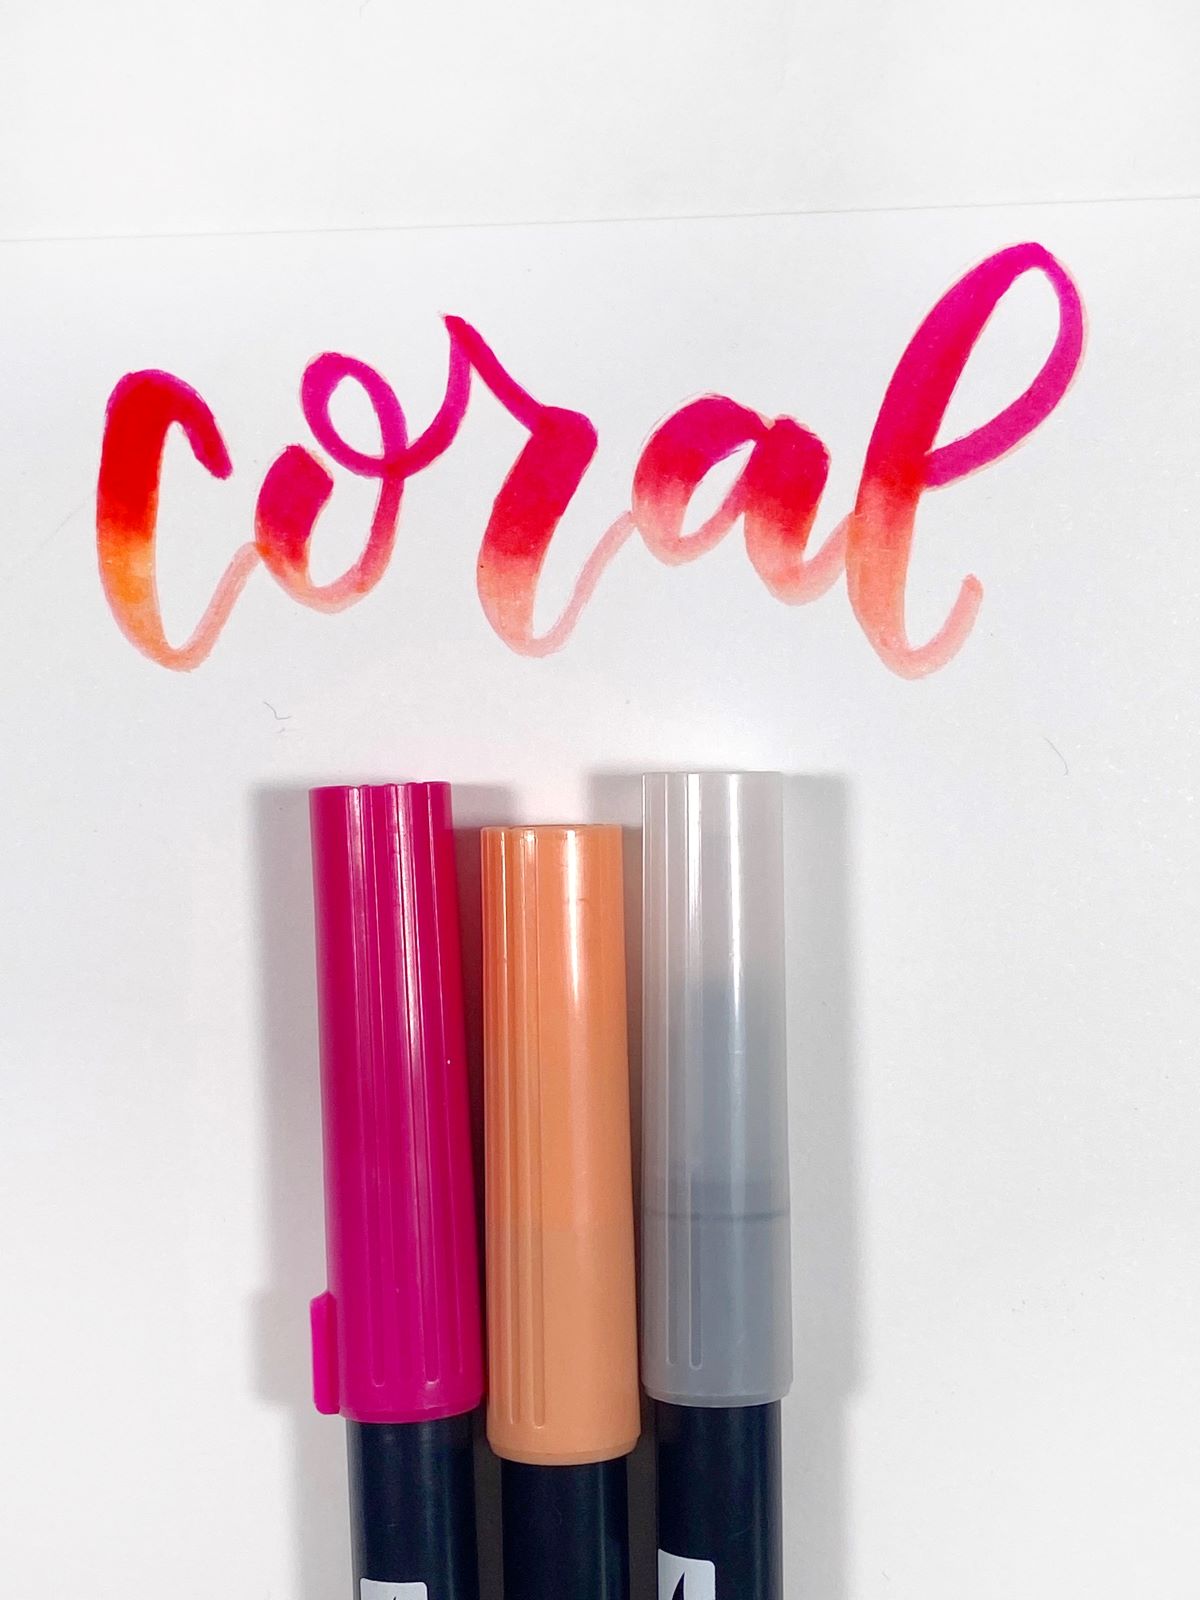 Marker Blended Lettering Card – Tombow Dual Brush Pens – K Werner